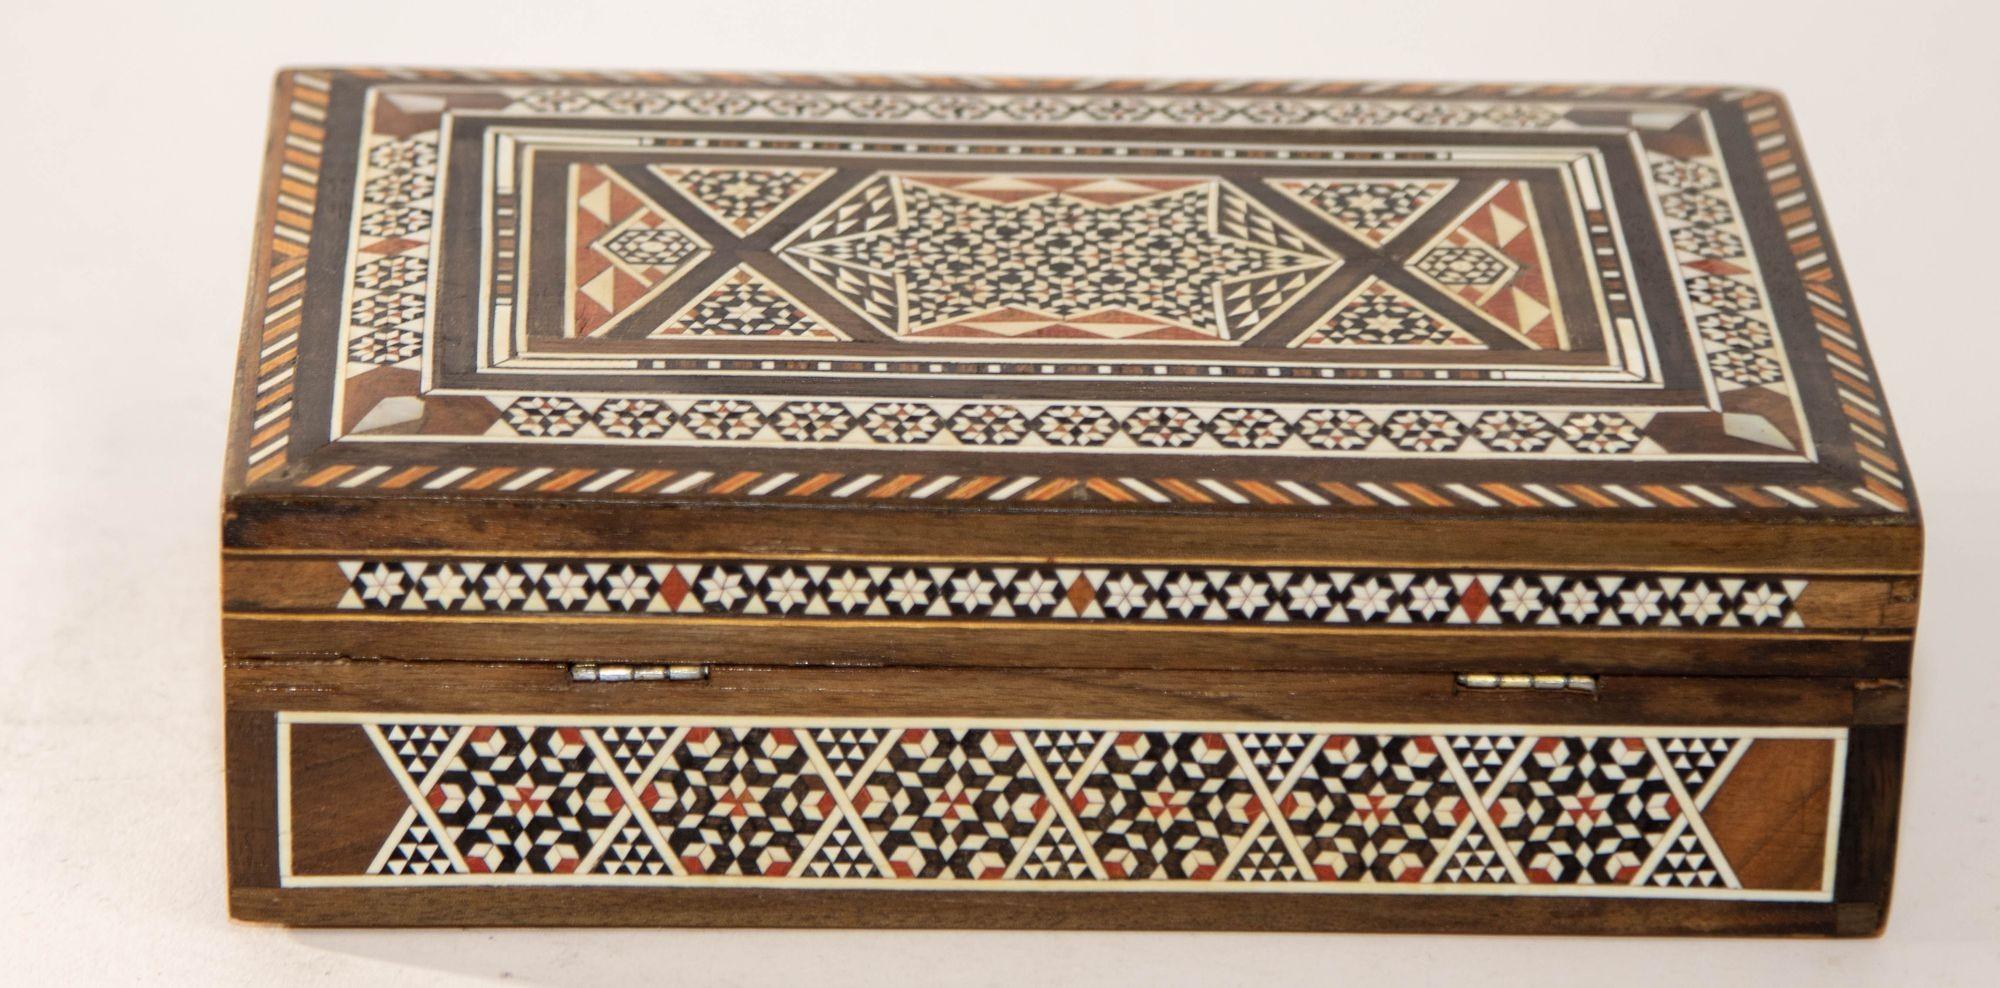 20th Century 1950s Large Decorative Middle Eastern Islamic Moorish Box For Sale